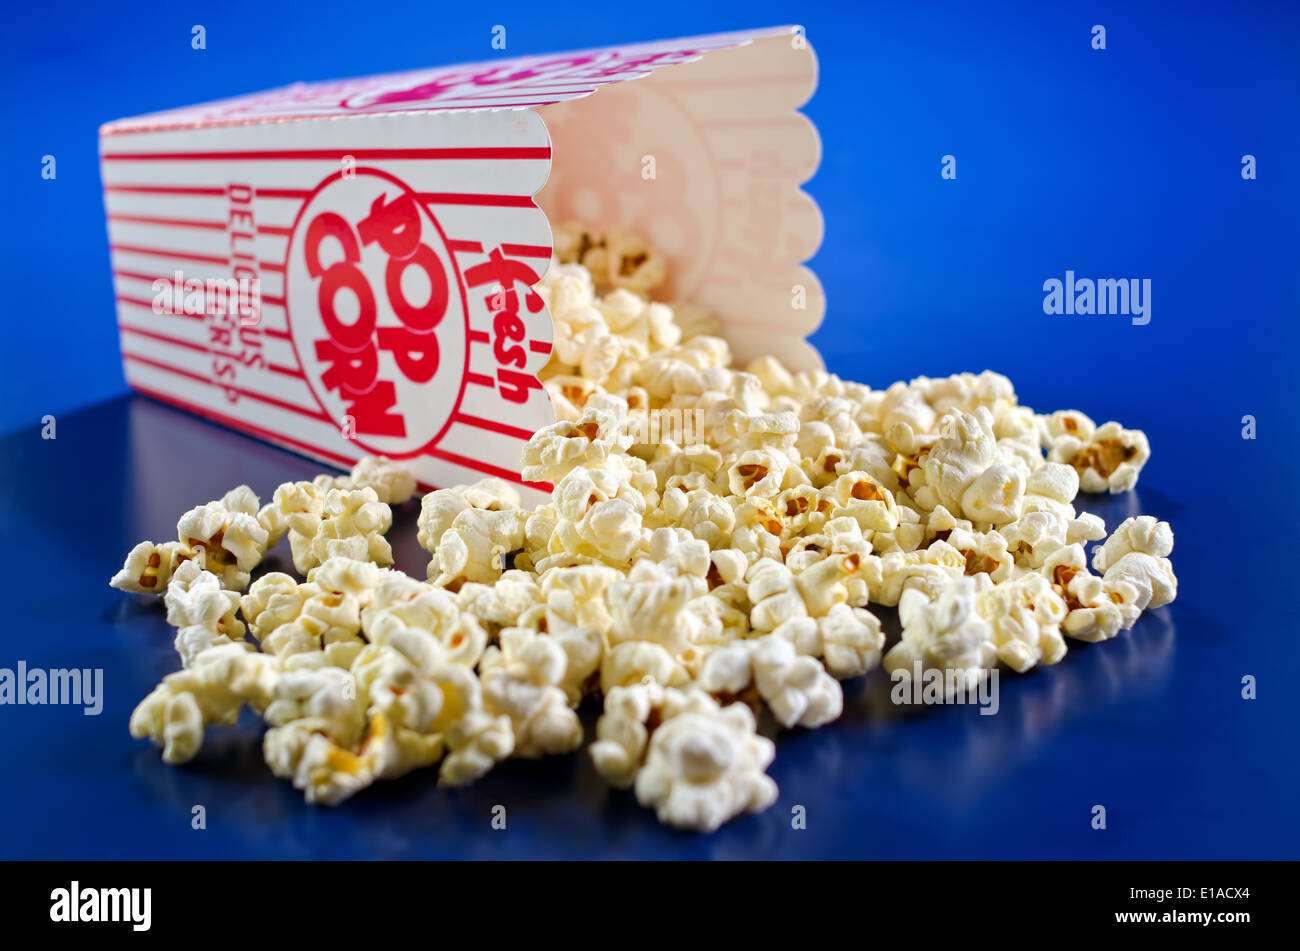 Freshly popped popcorn against a vivid blue background. Stock Photo